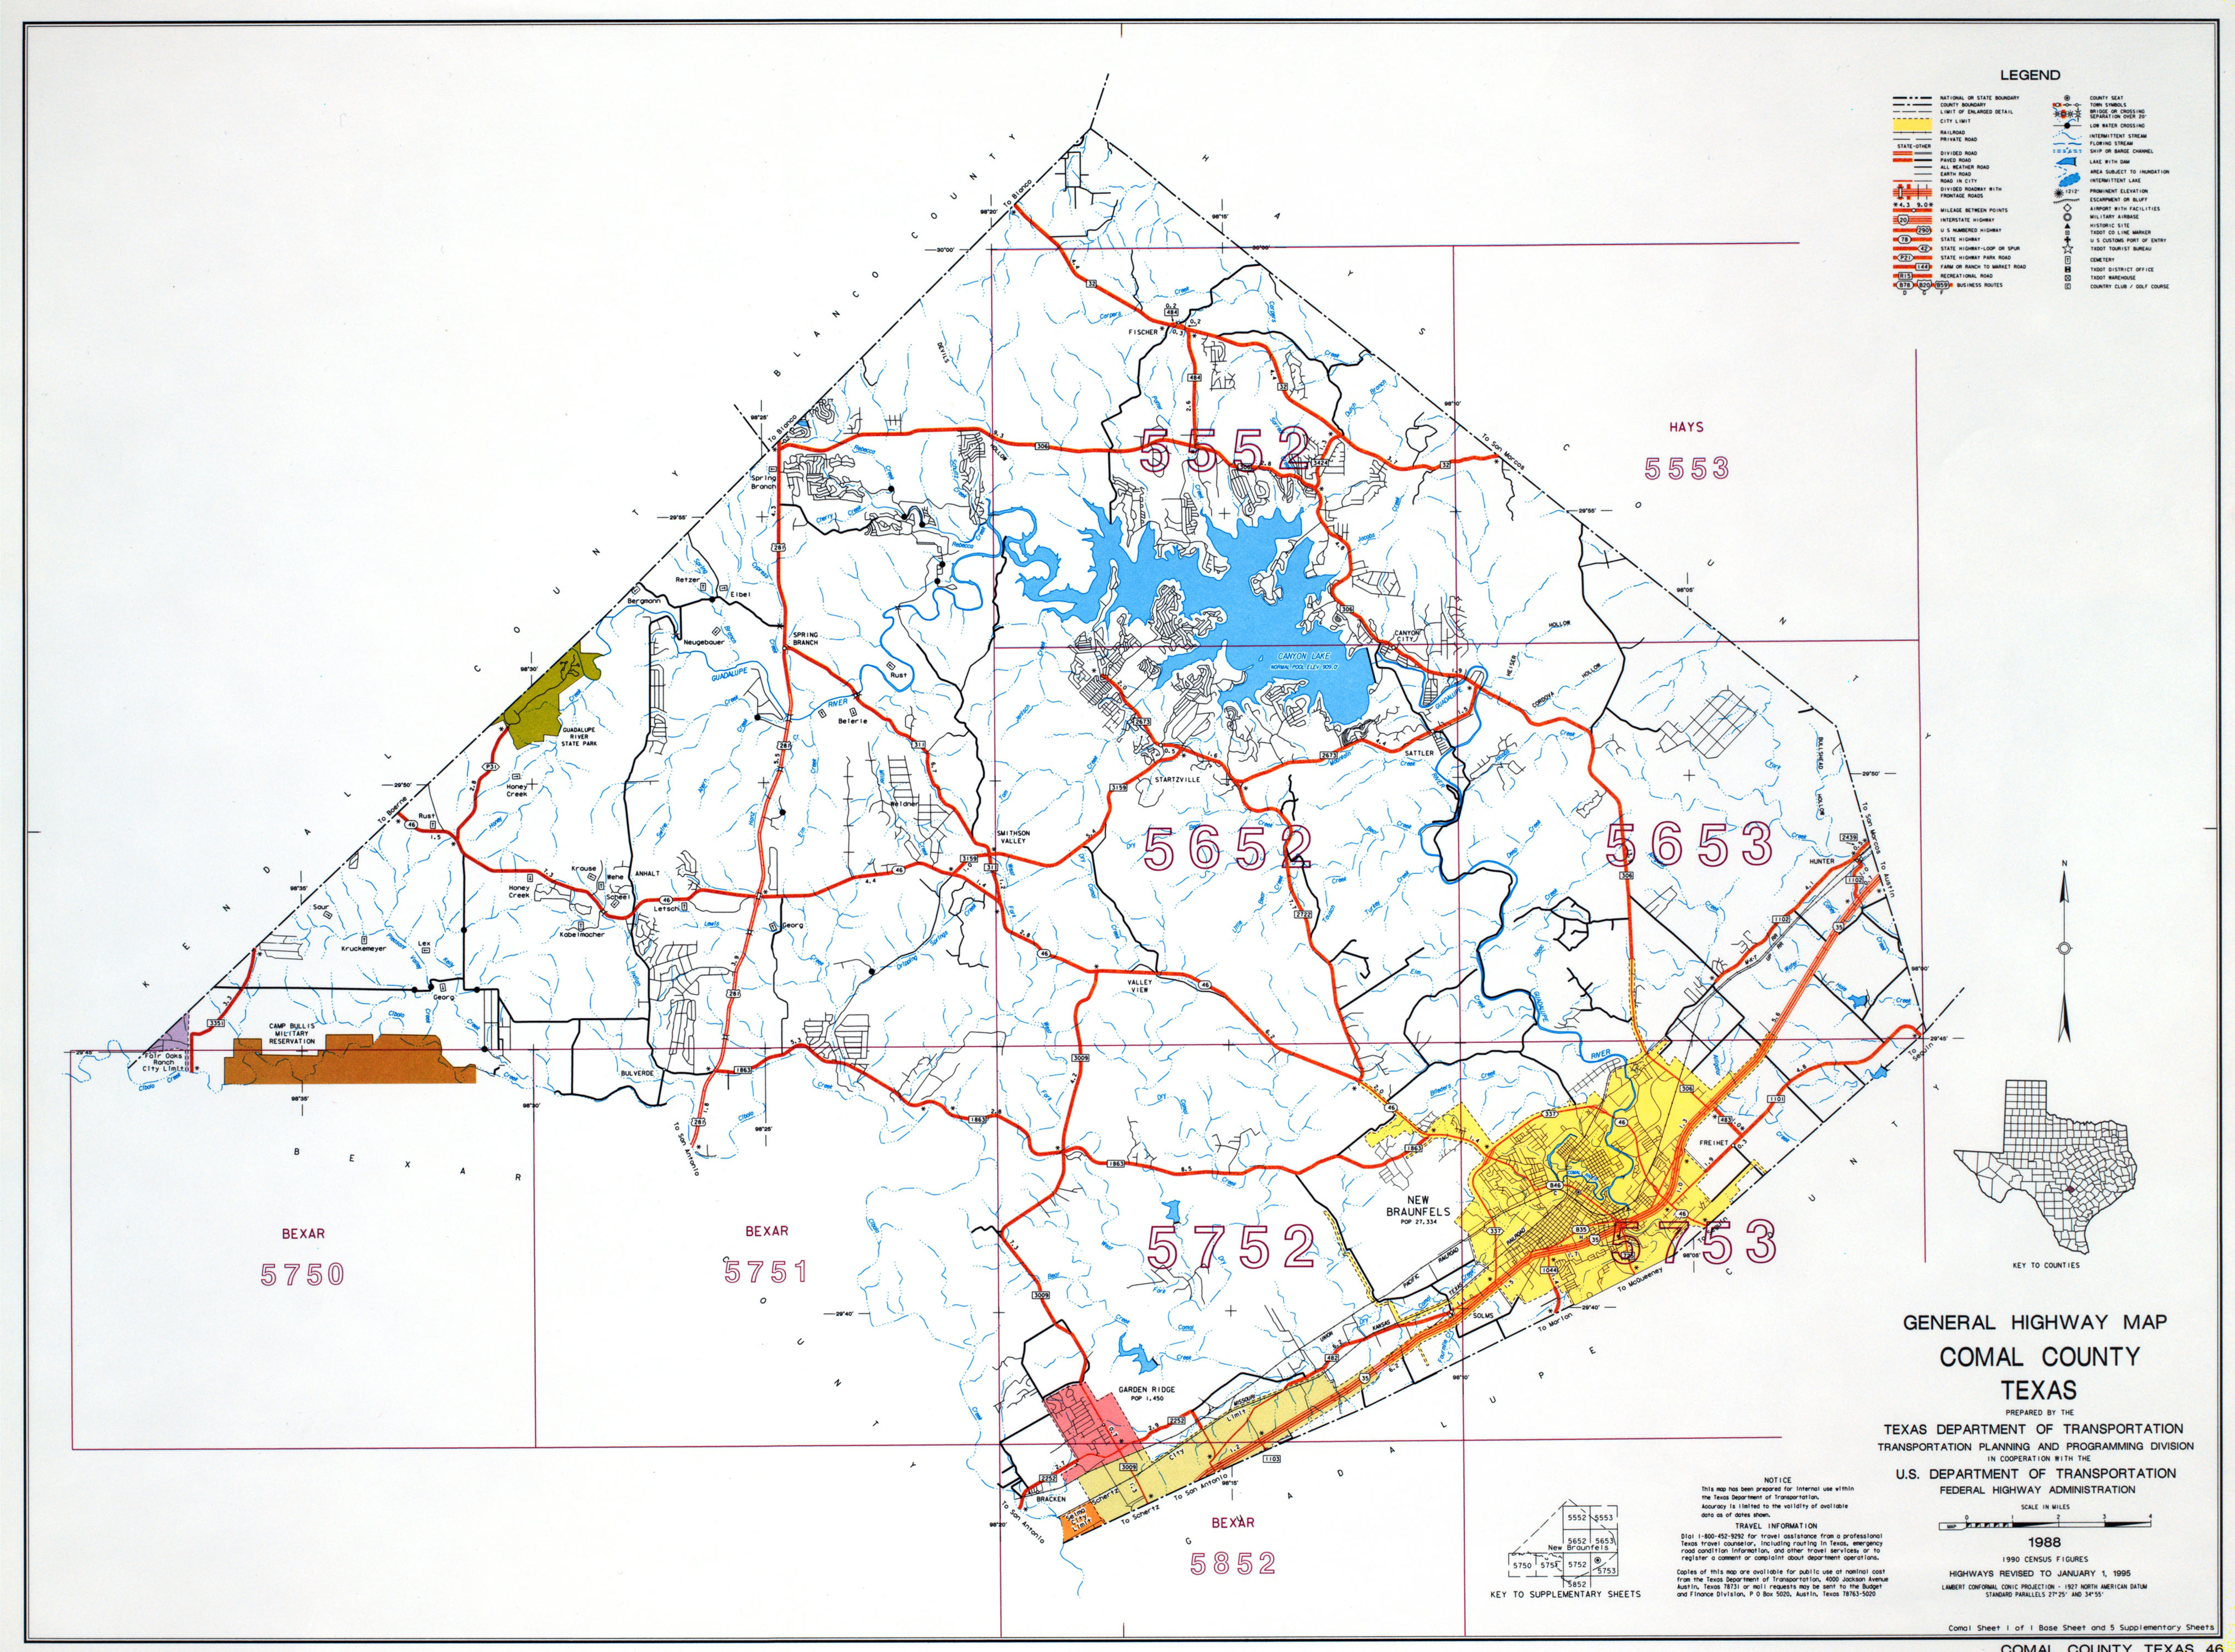 Comal County (County #46, Base Sheet 1) .